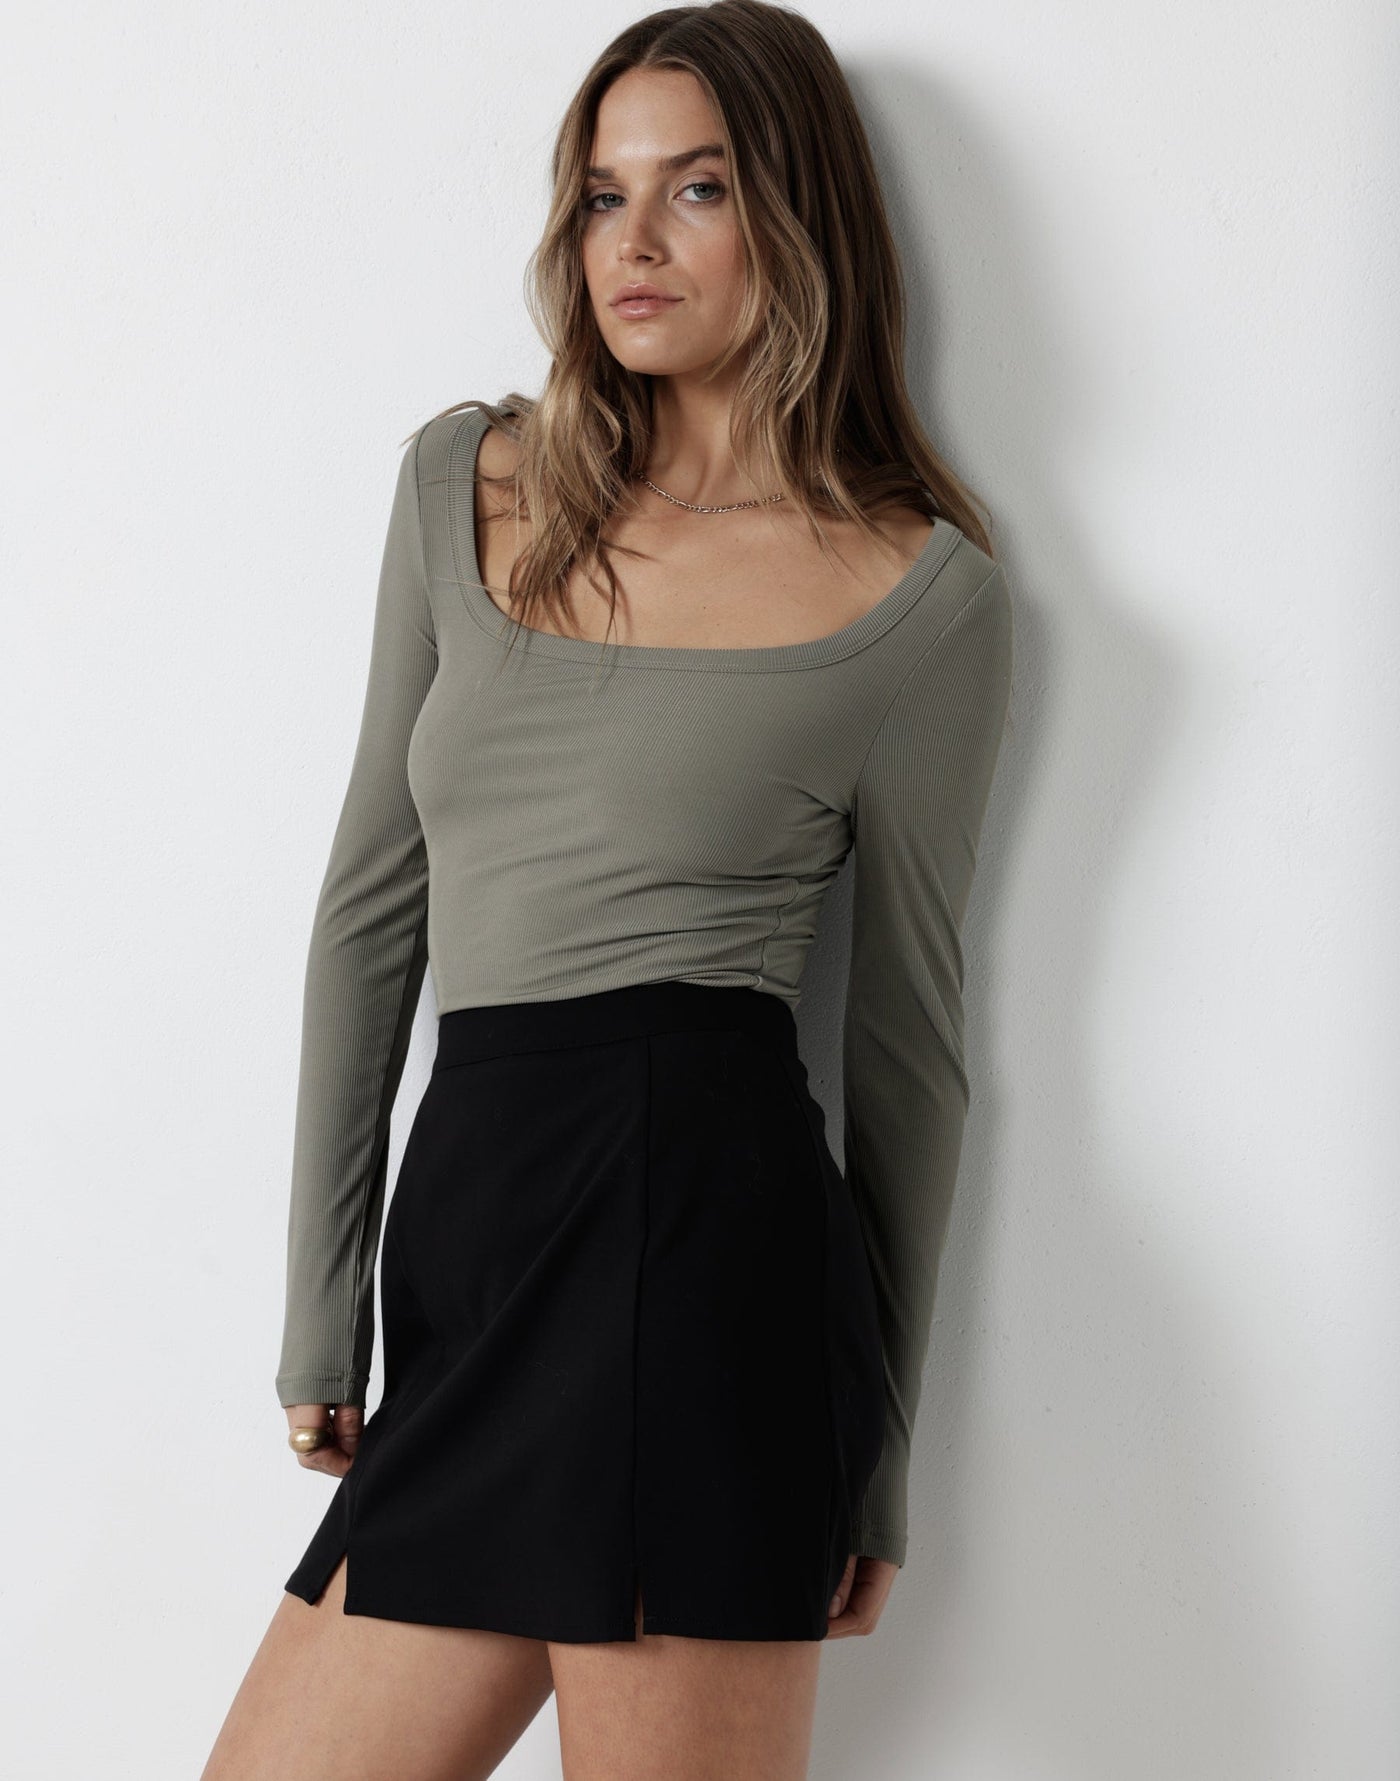  - Women's Skirt - Charcoal Clothing